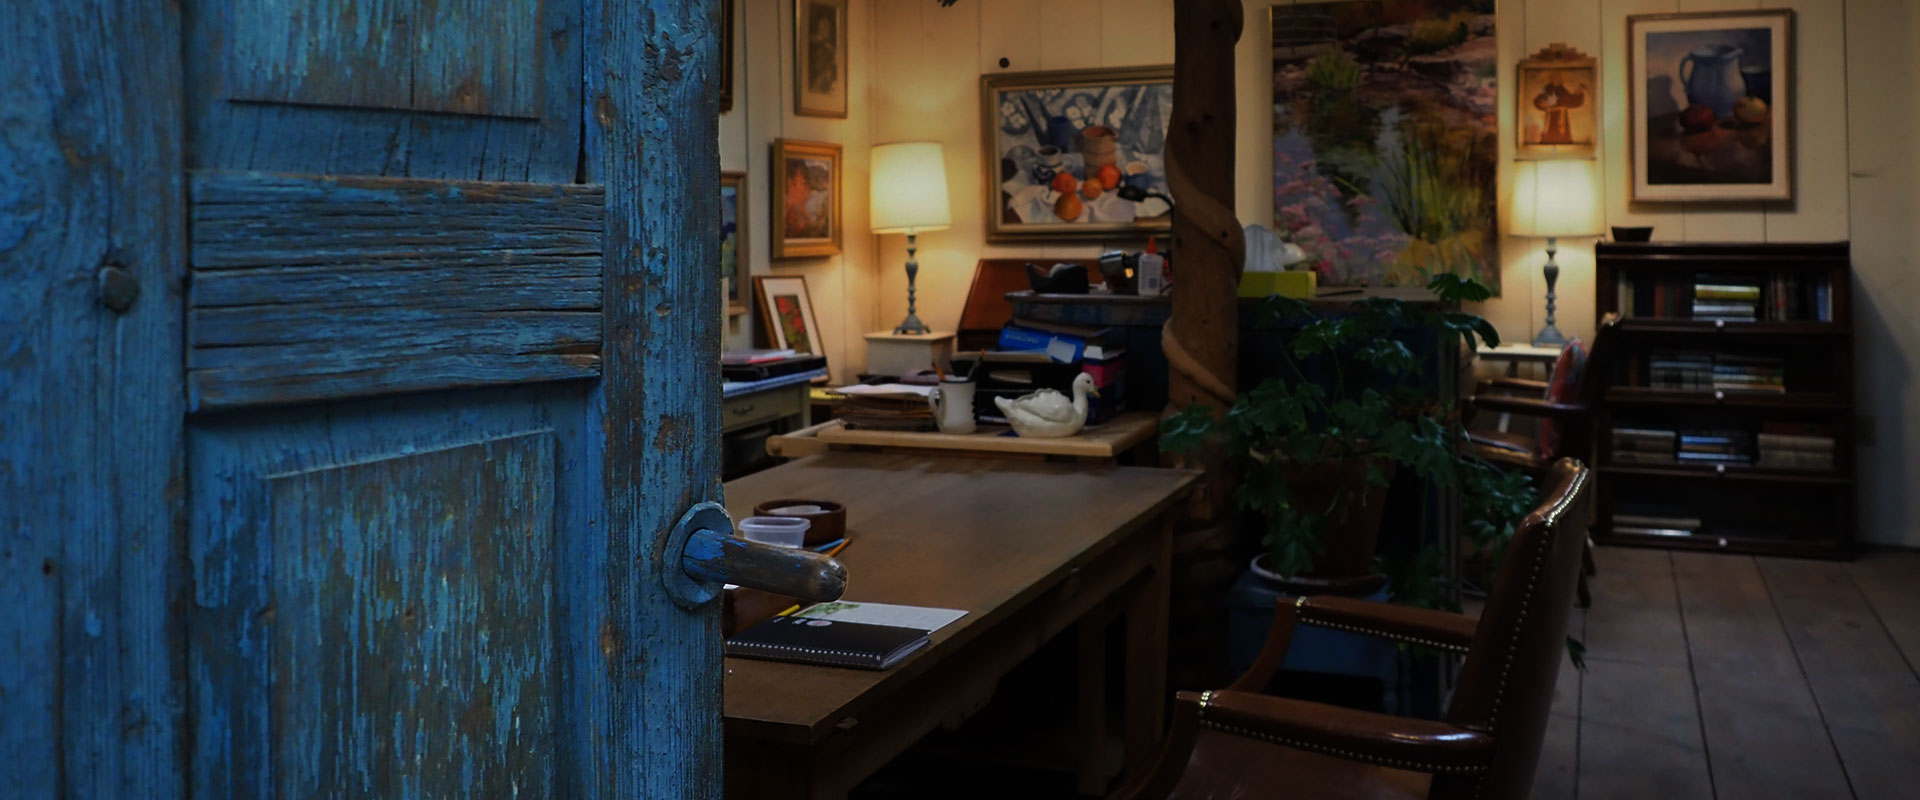 toas house with blue door studio room for joan hughston artist born in dallas, texas